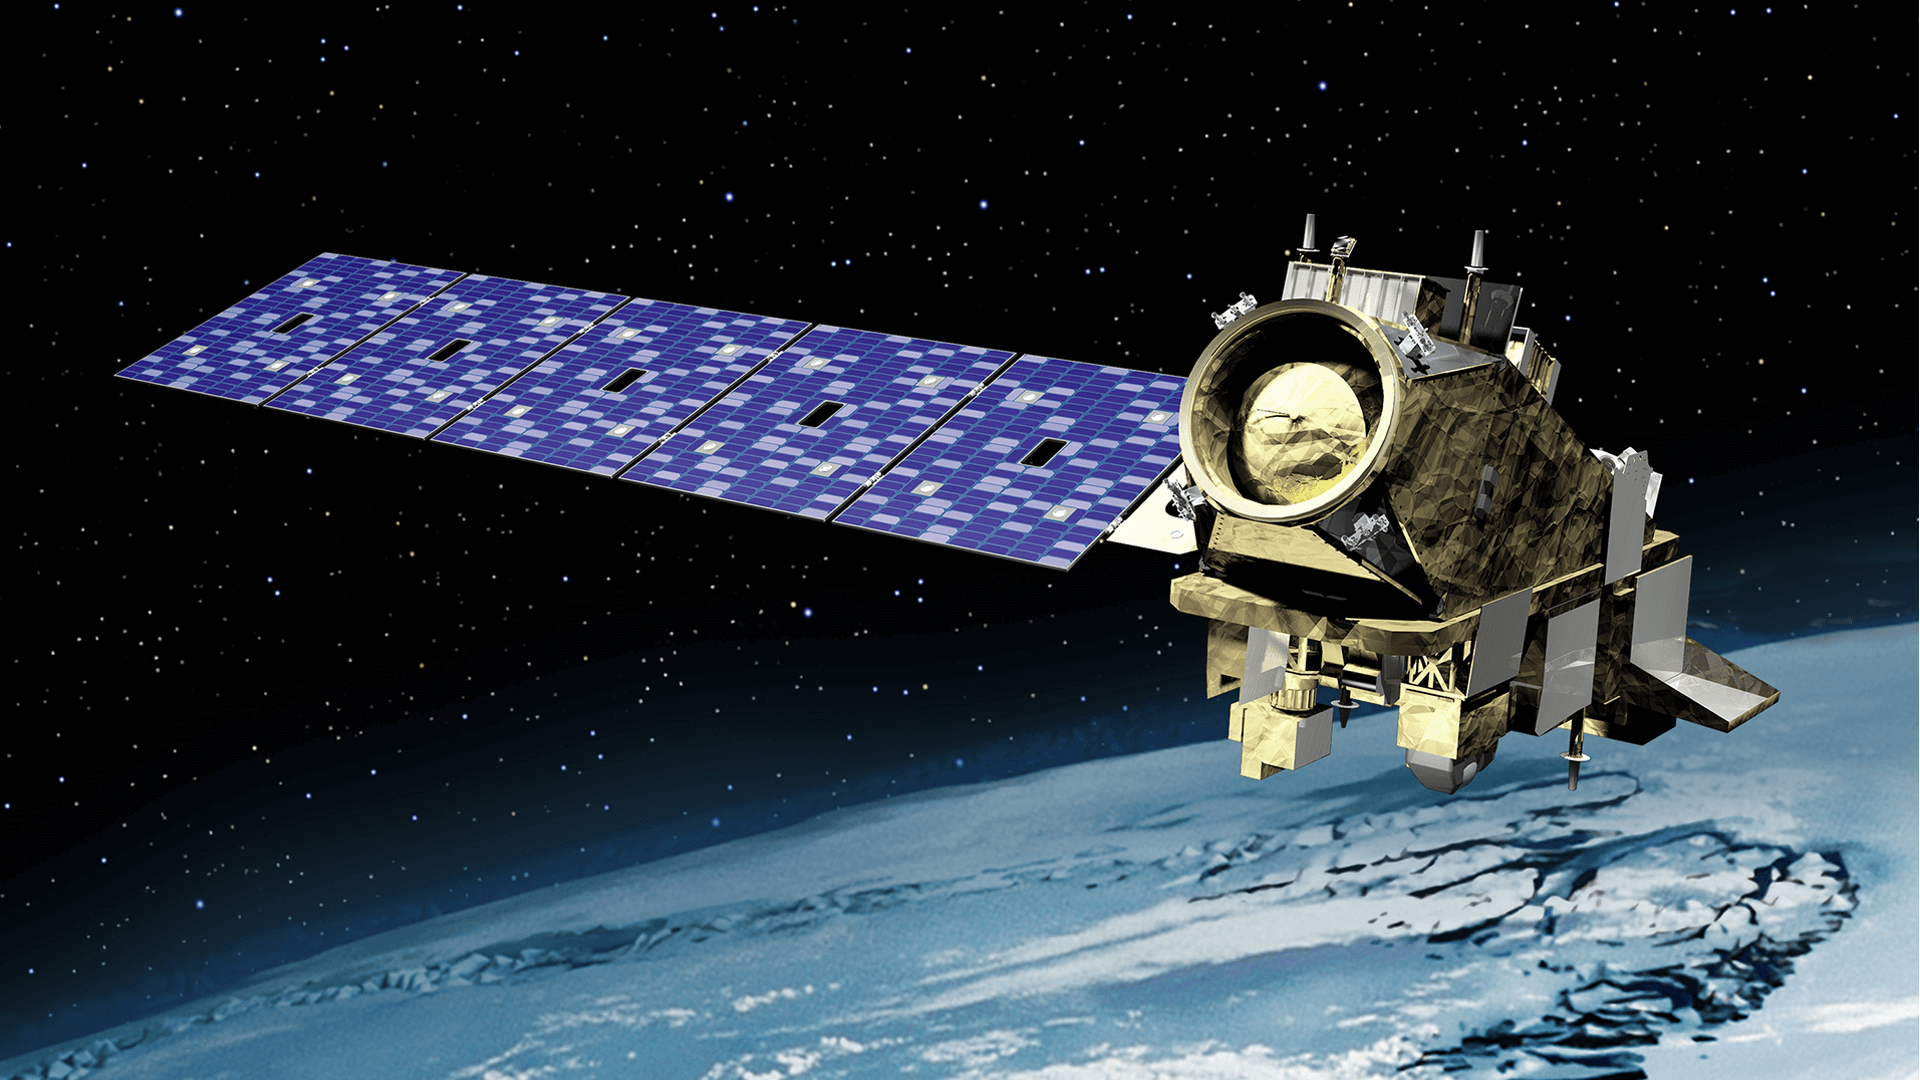 JPSS mission. Image: NASA